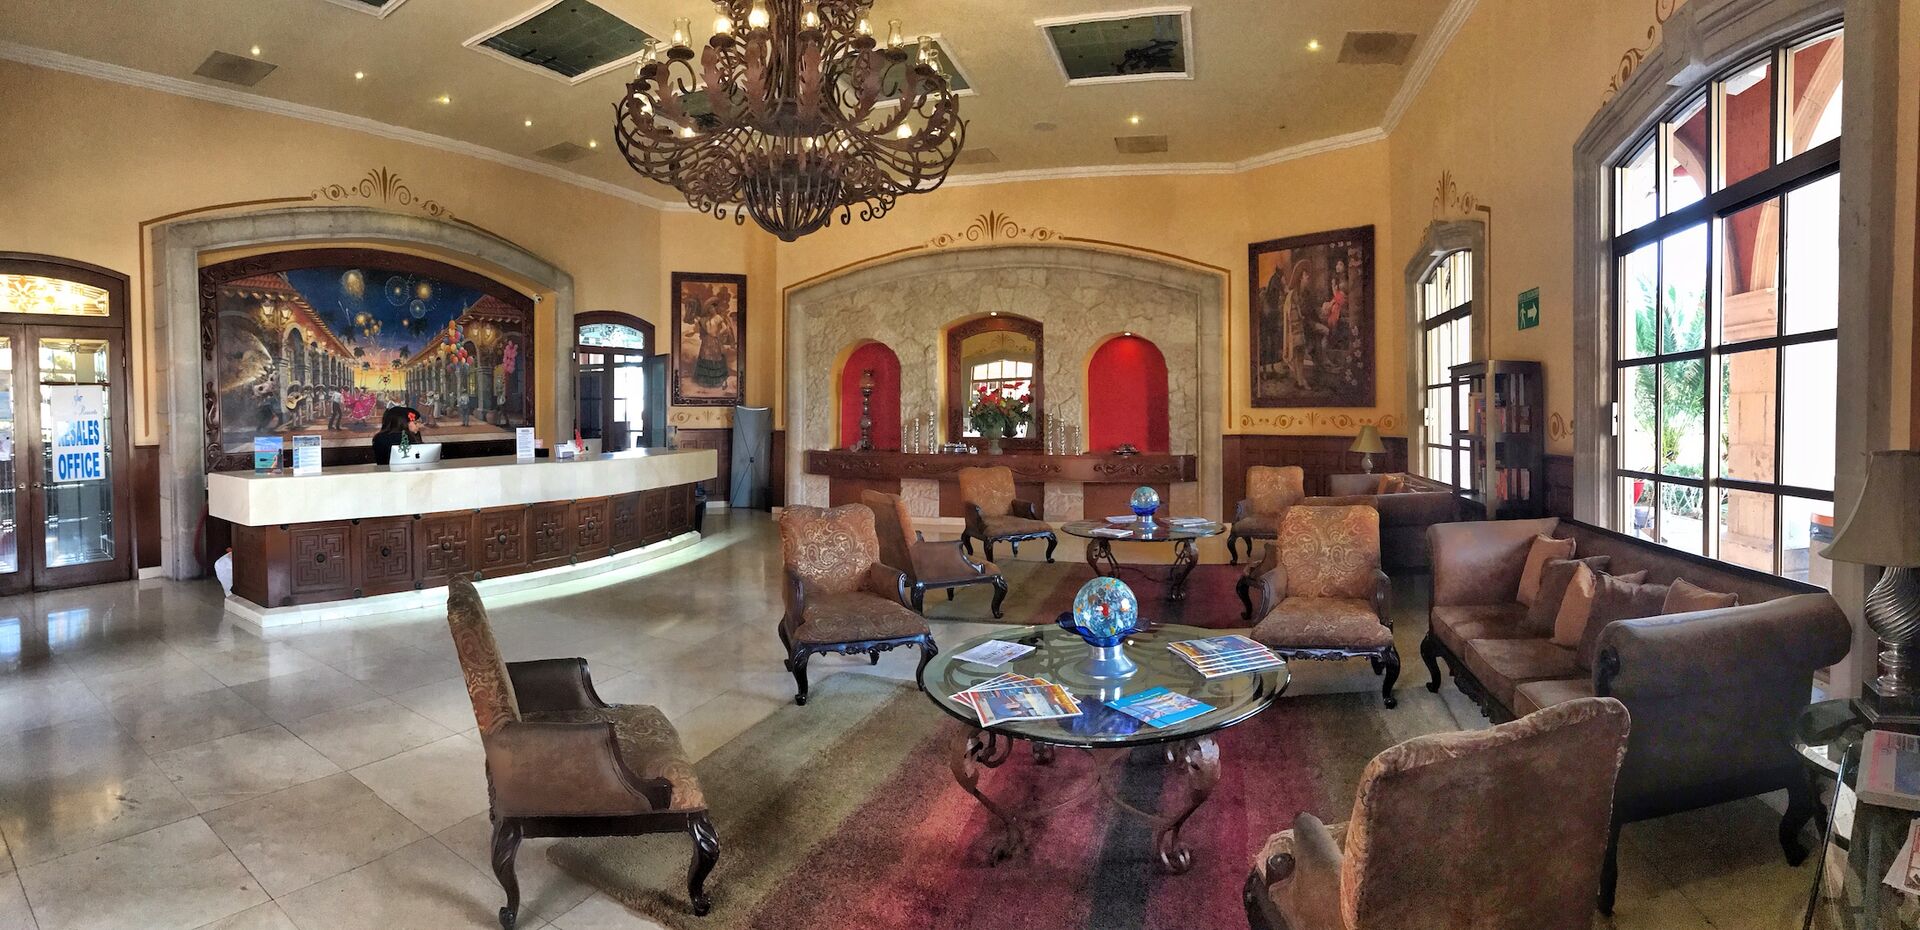 The Lobby of the Sonoran Sun Resort